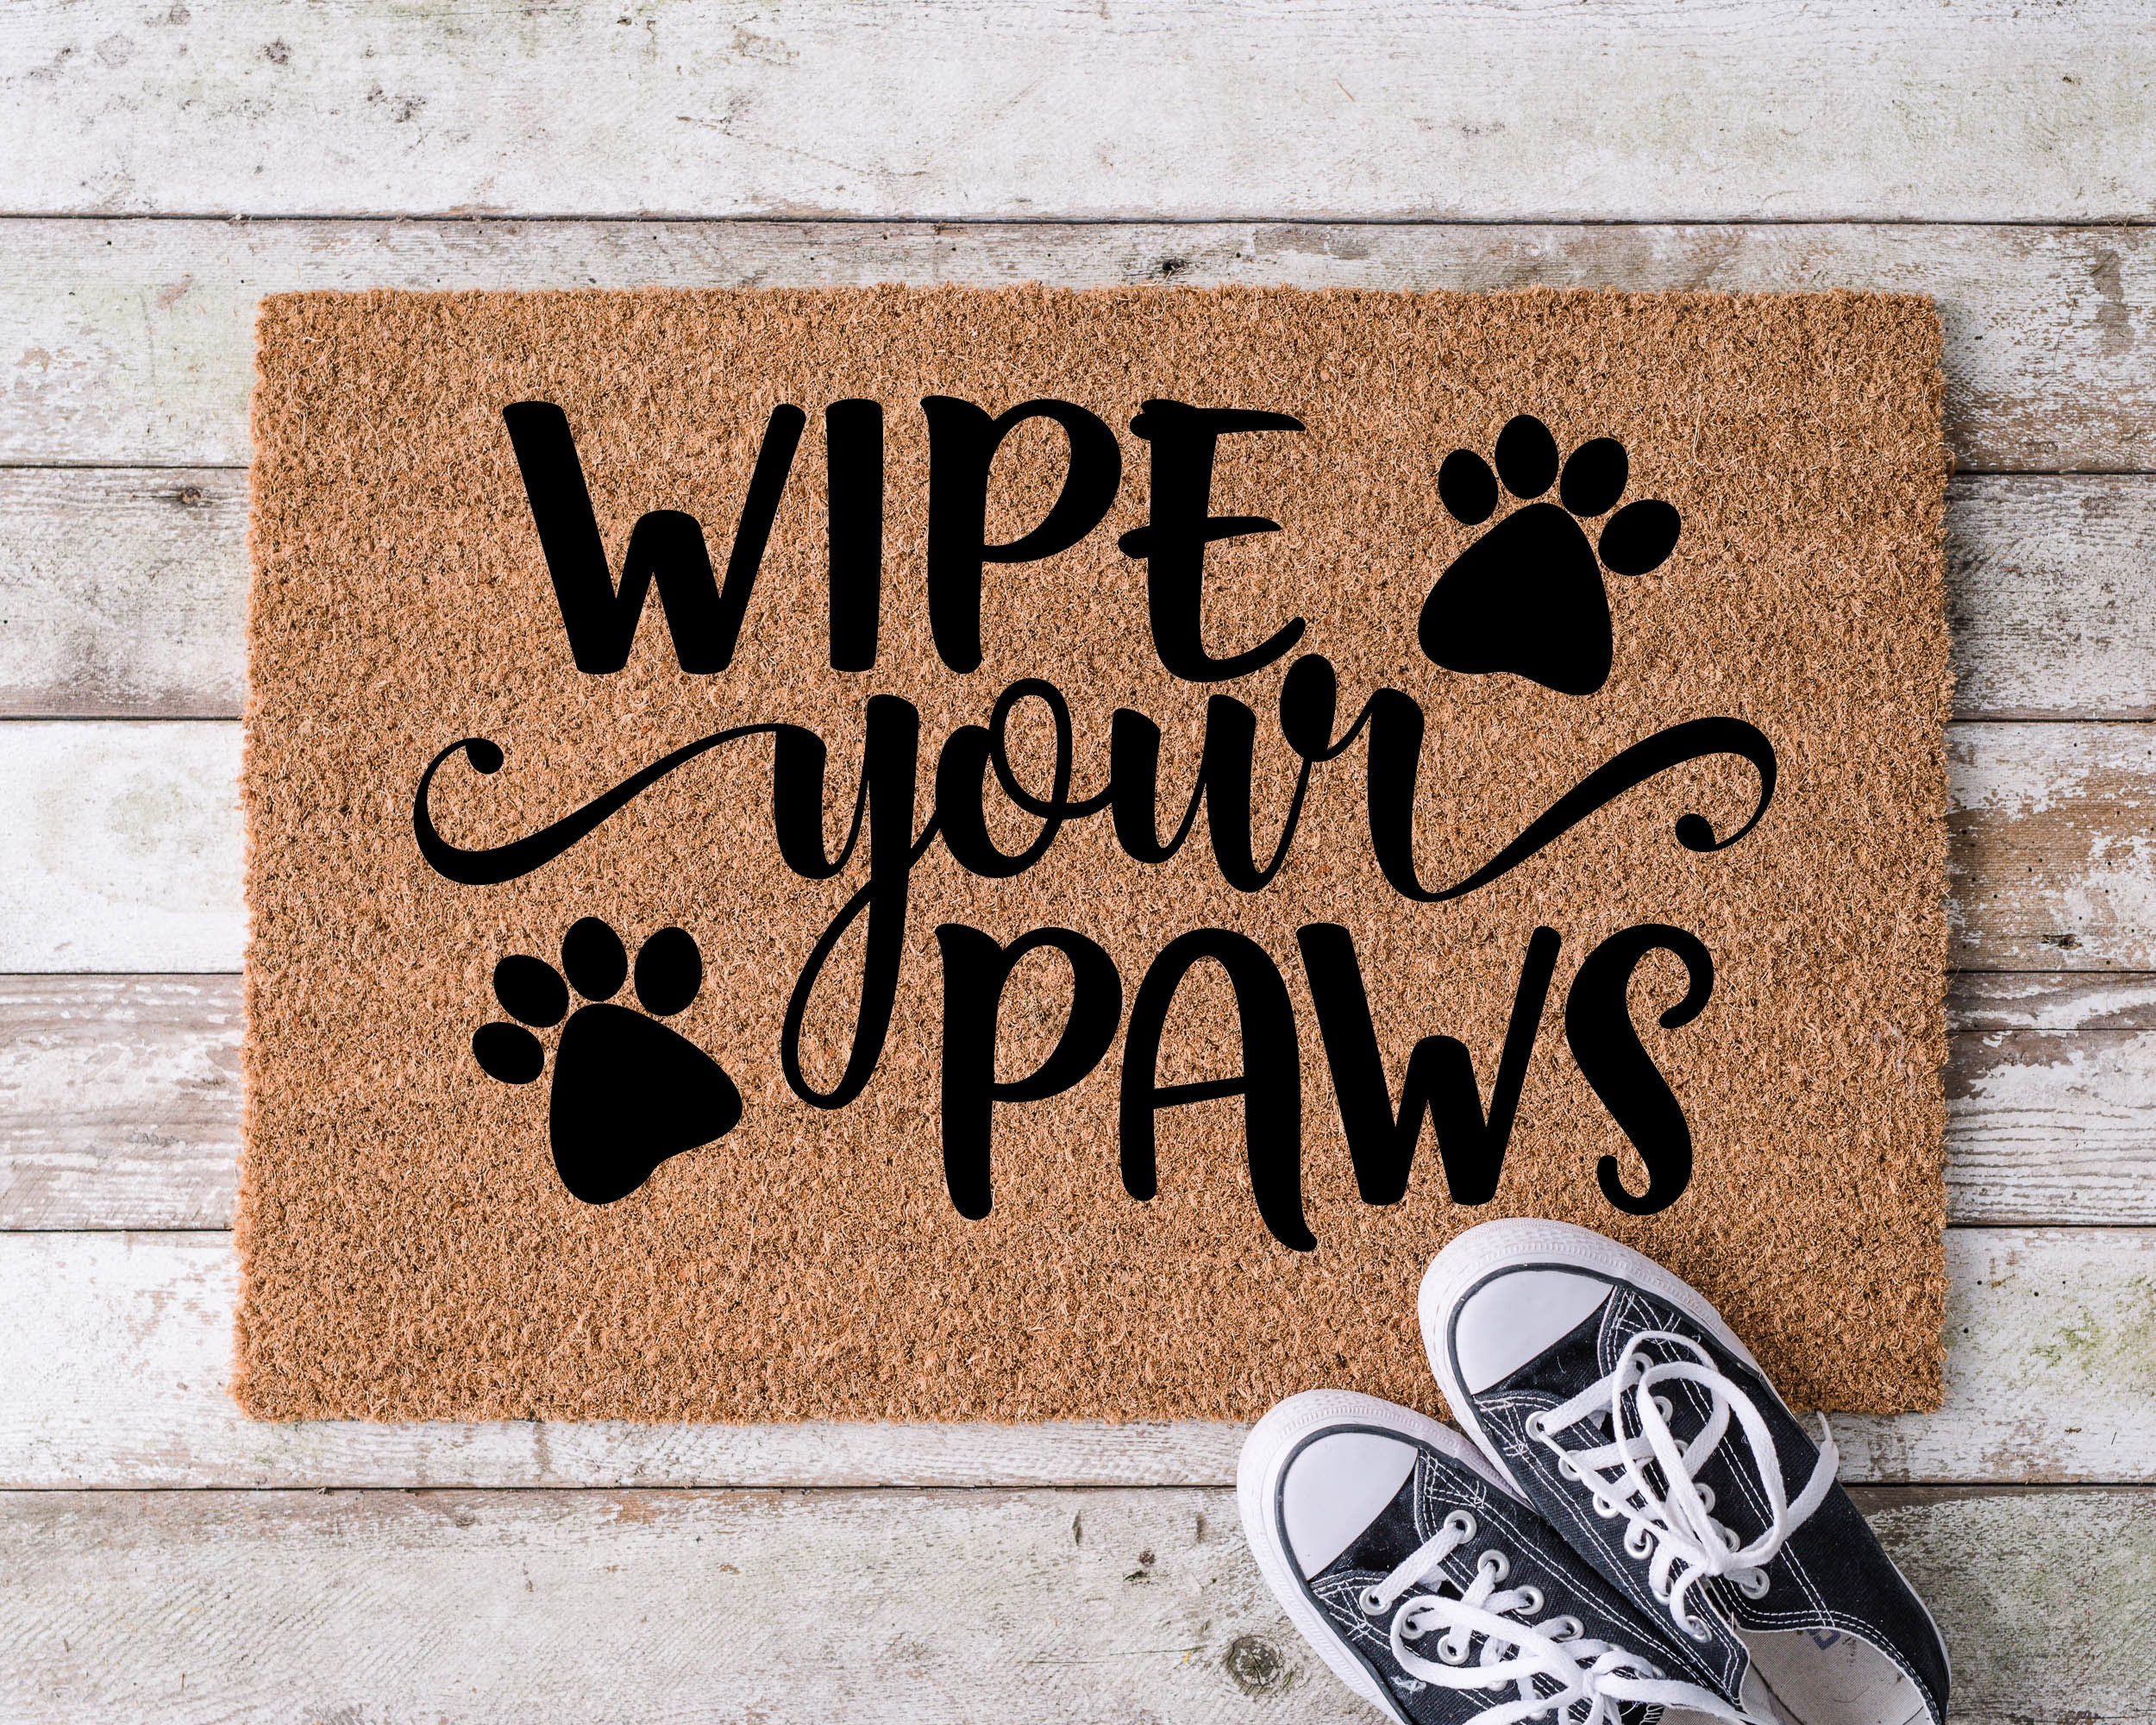 Wipe Your Paws Cat Doormat, Cat Lover Gift, Cat Meow Mats HN590